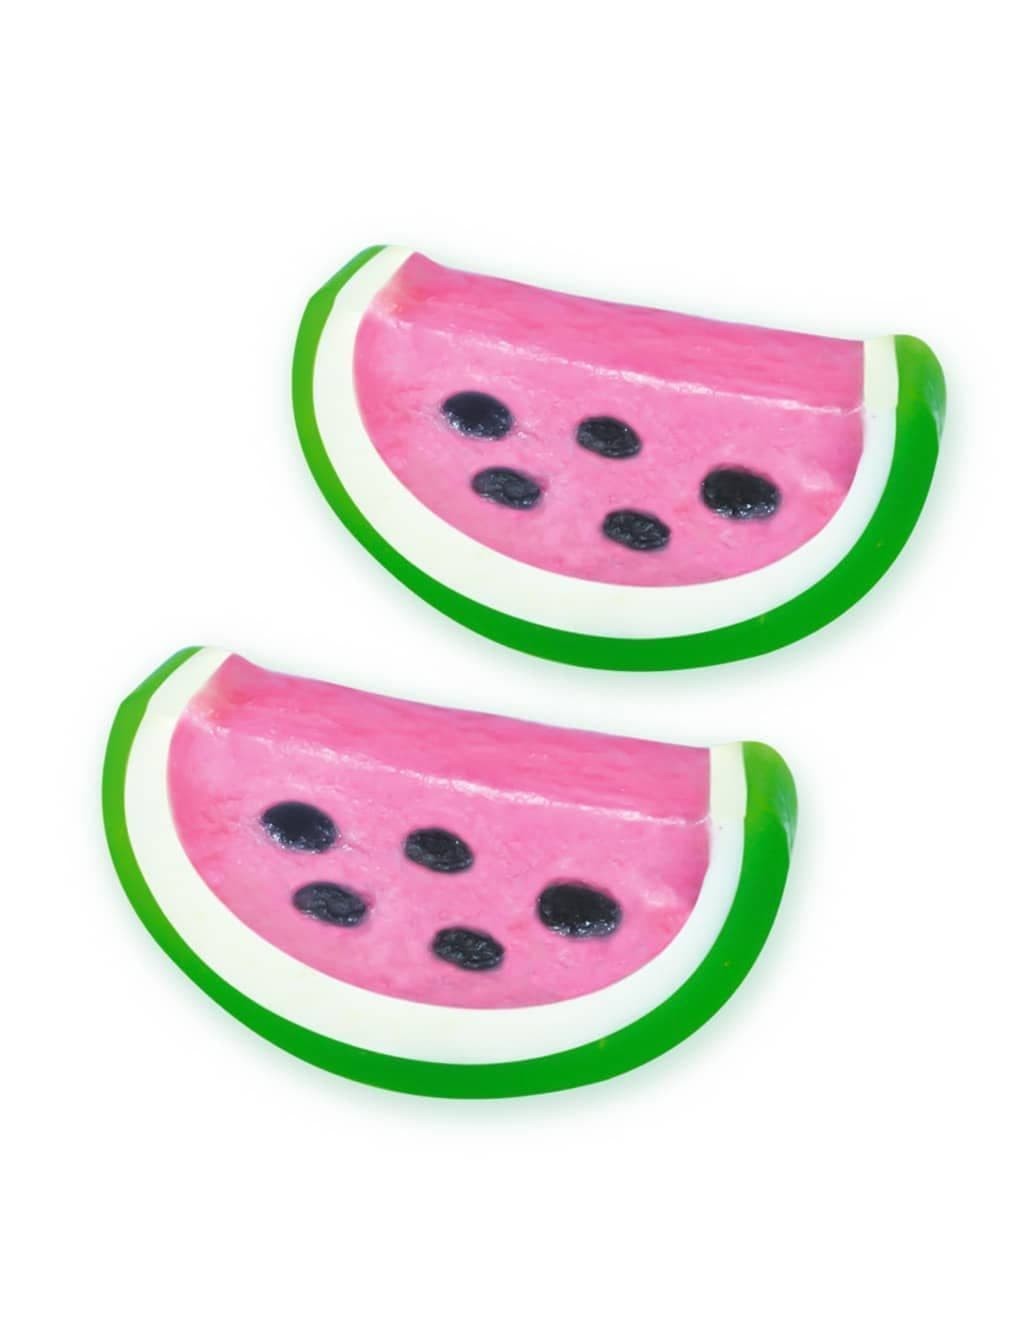 Vidal watermelon slices